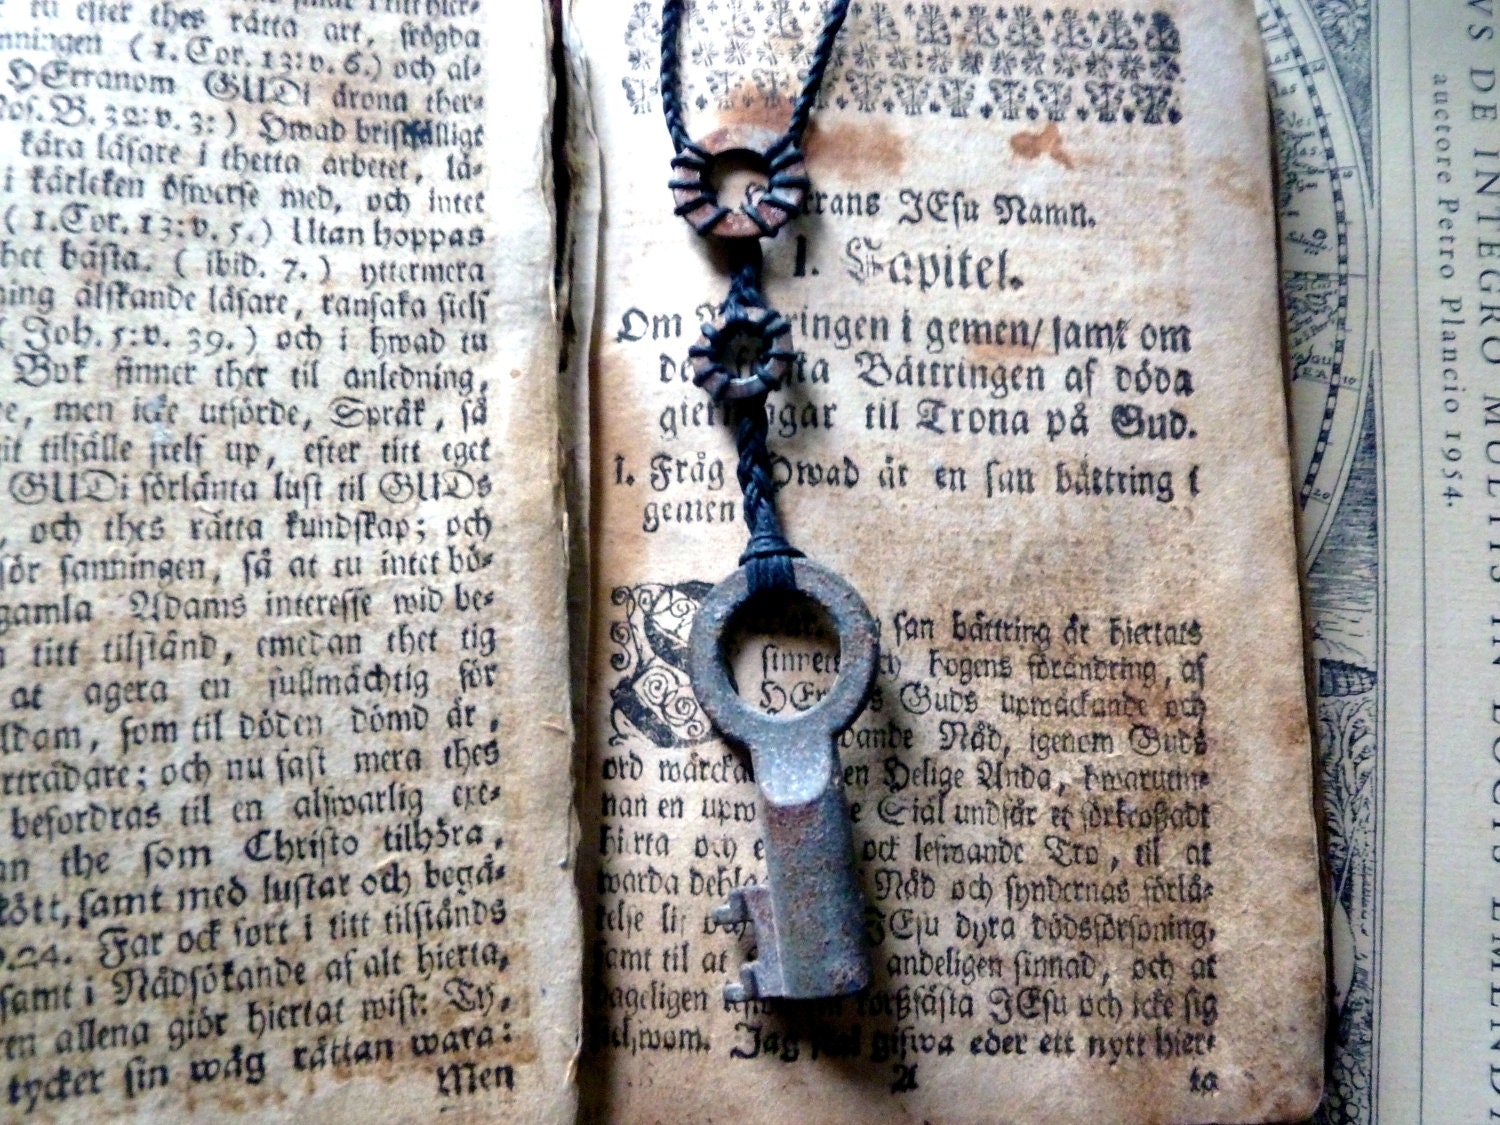 Rusty vintage key with two rusty metal washers on handbraided black cord - DreamSand